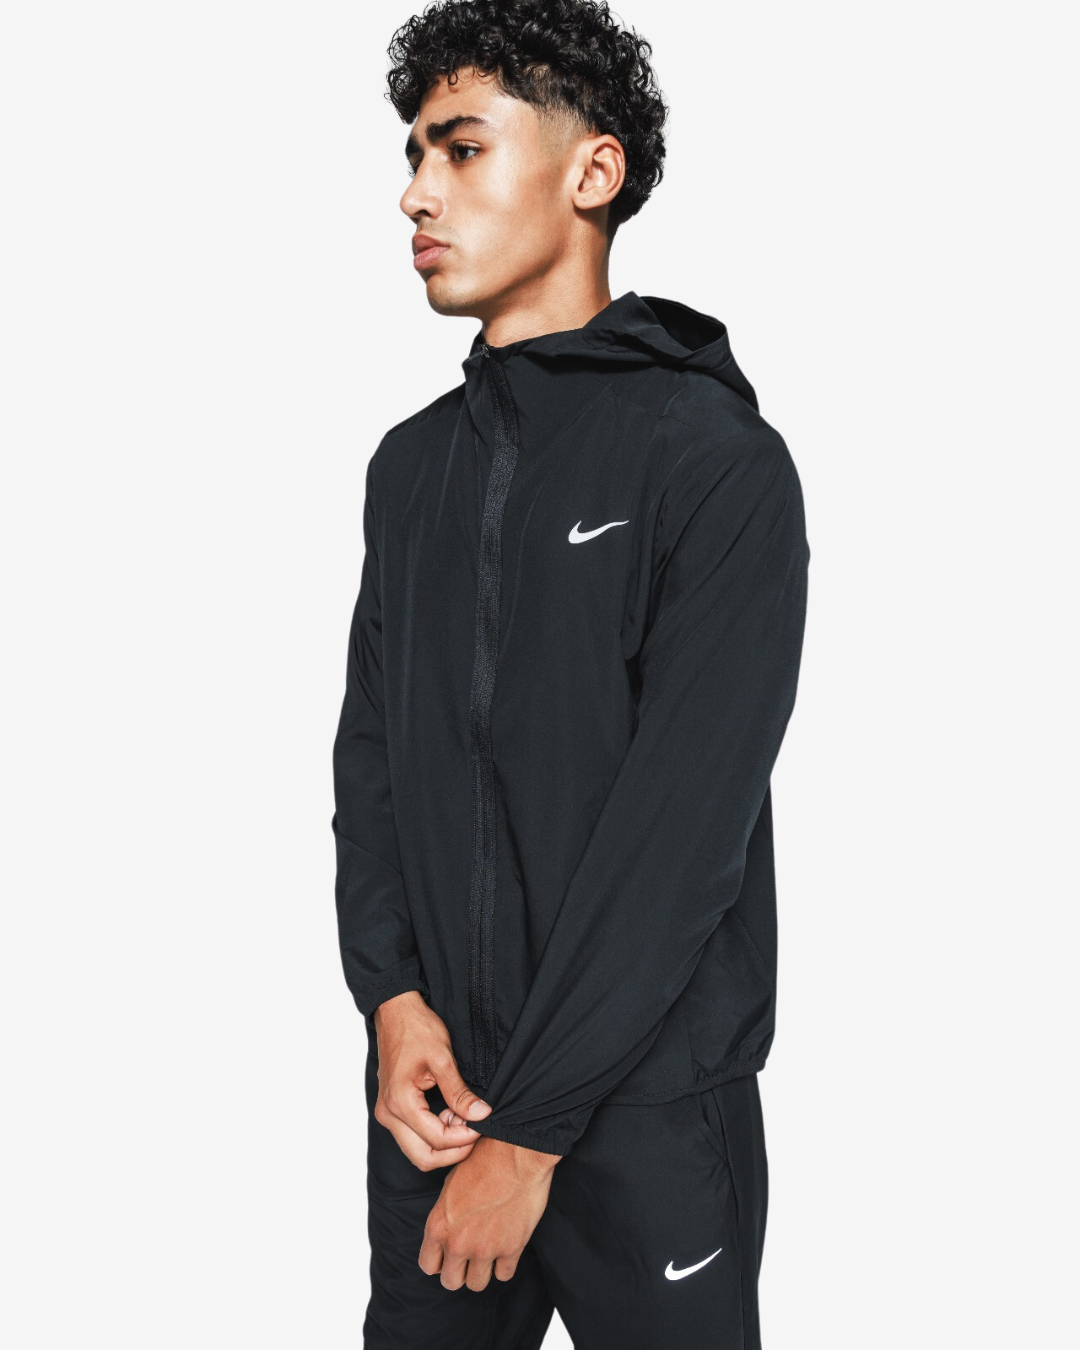 Veste Nike Form - Noir